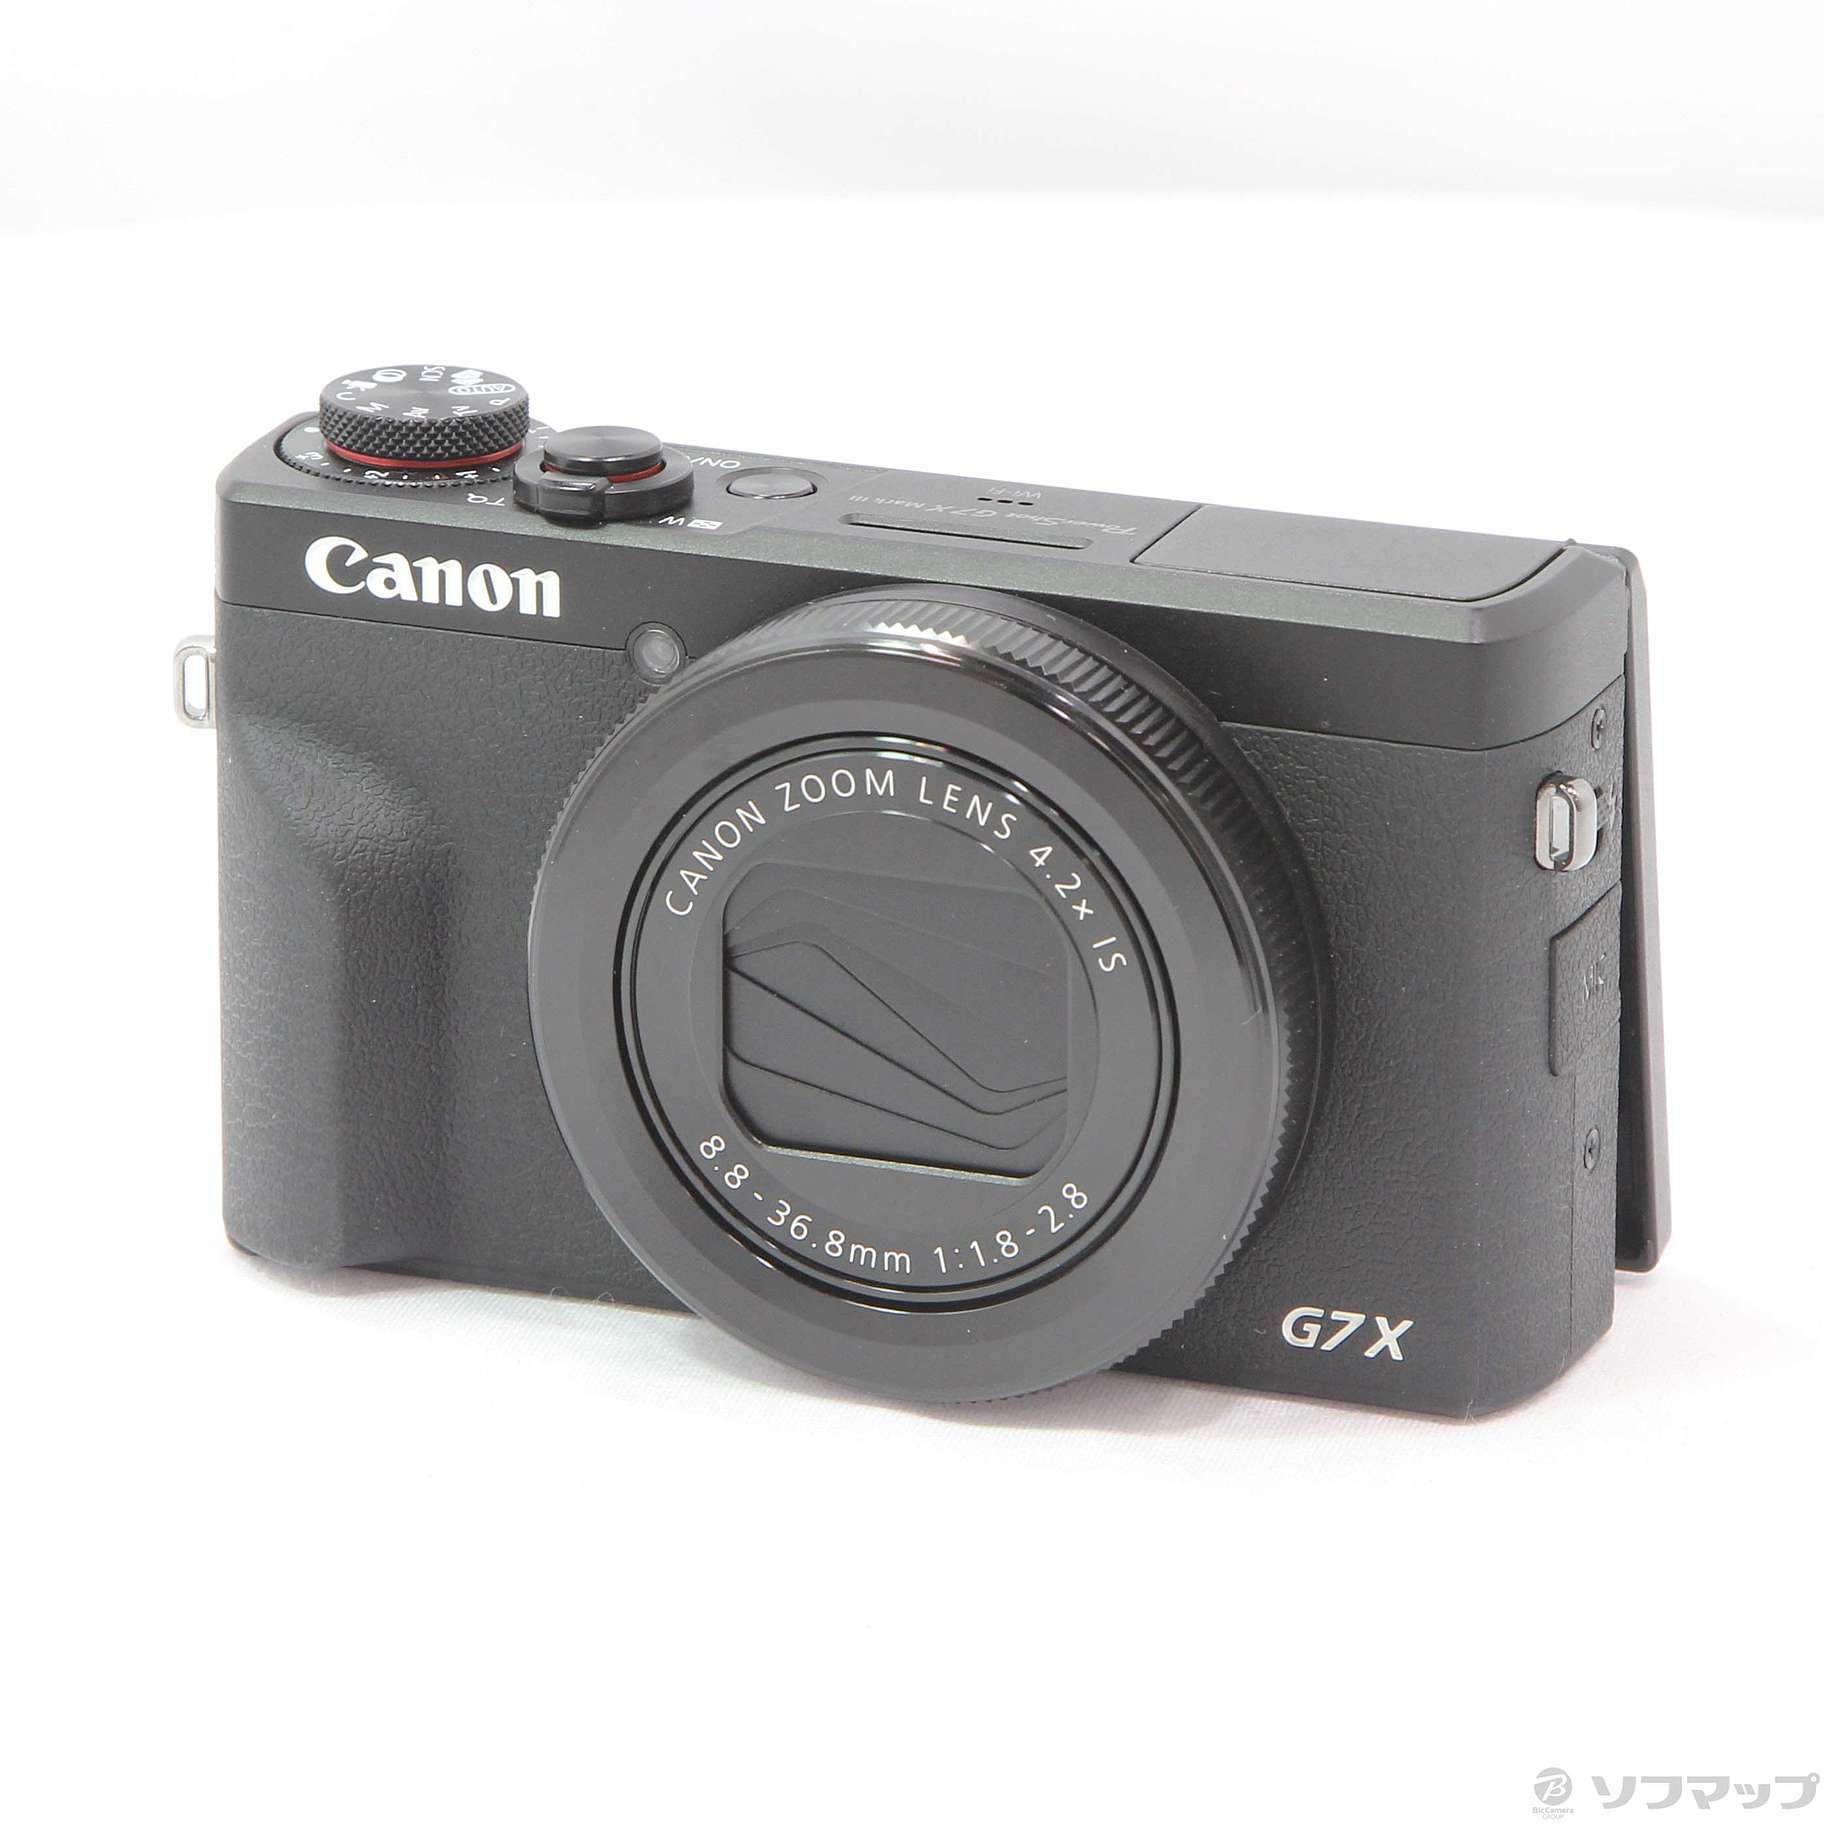 Canon PowerShot PSG7X